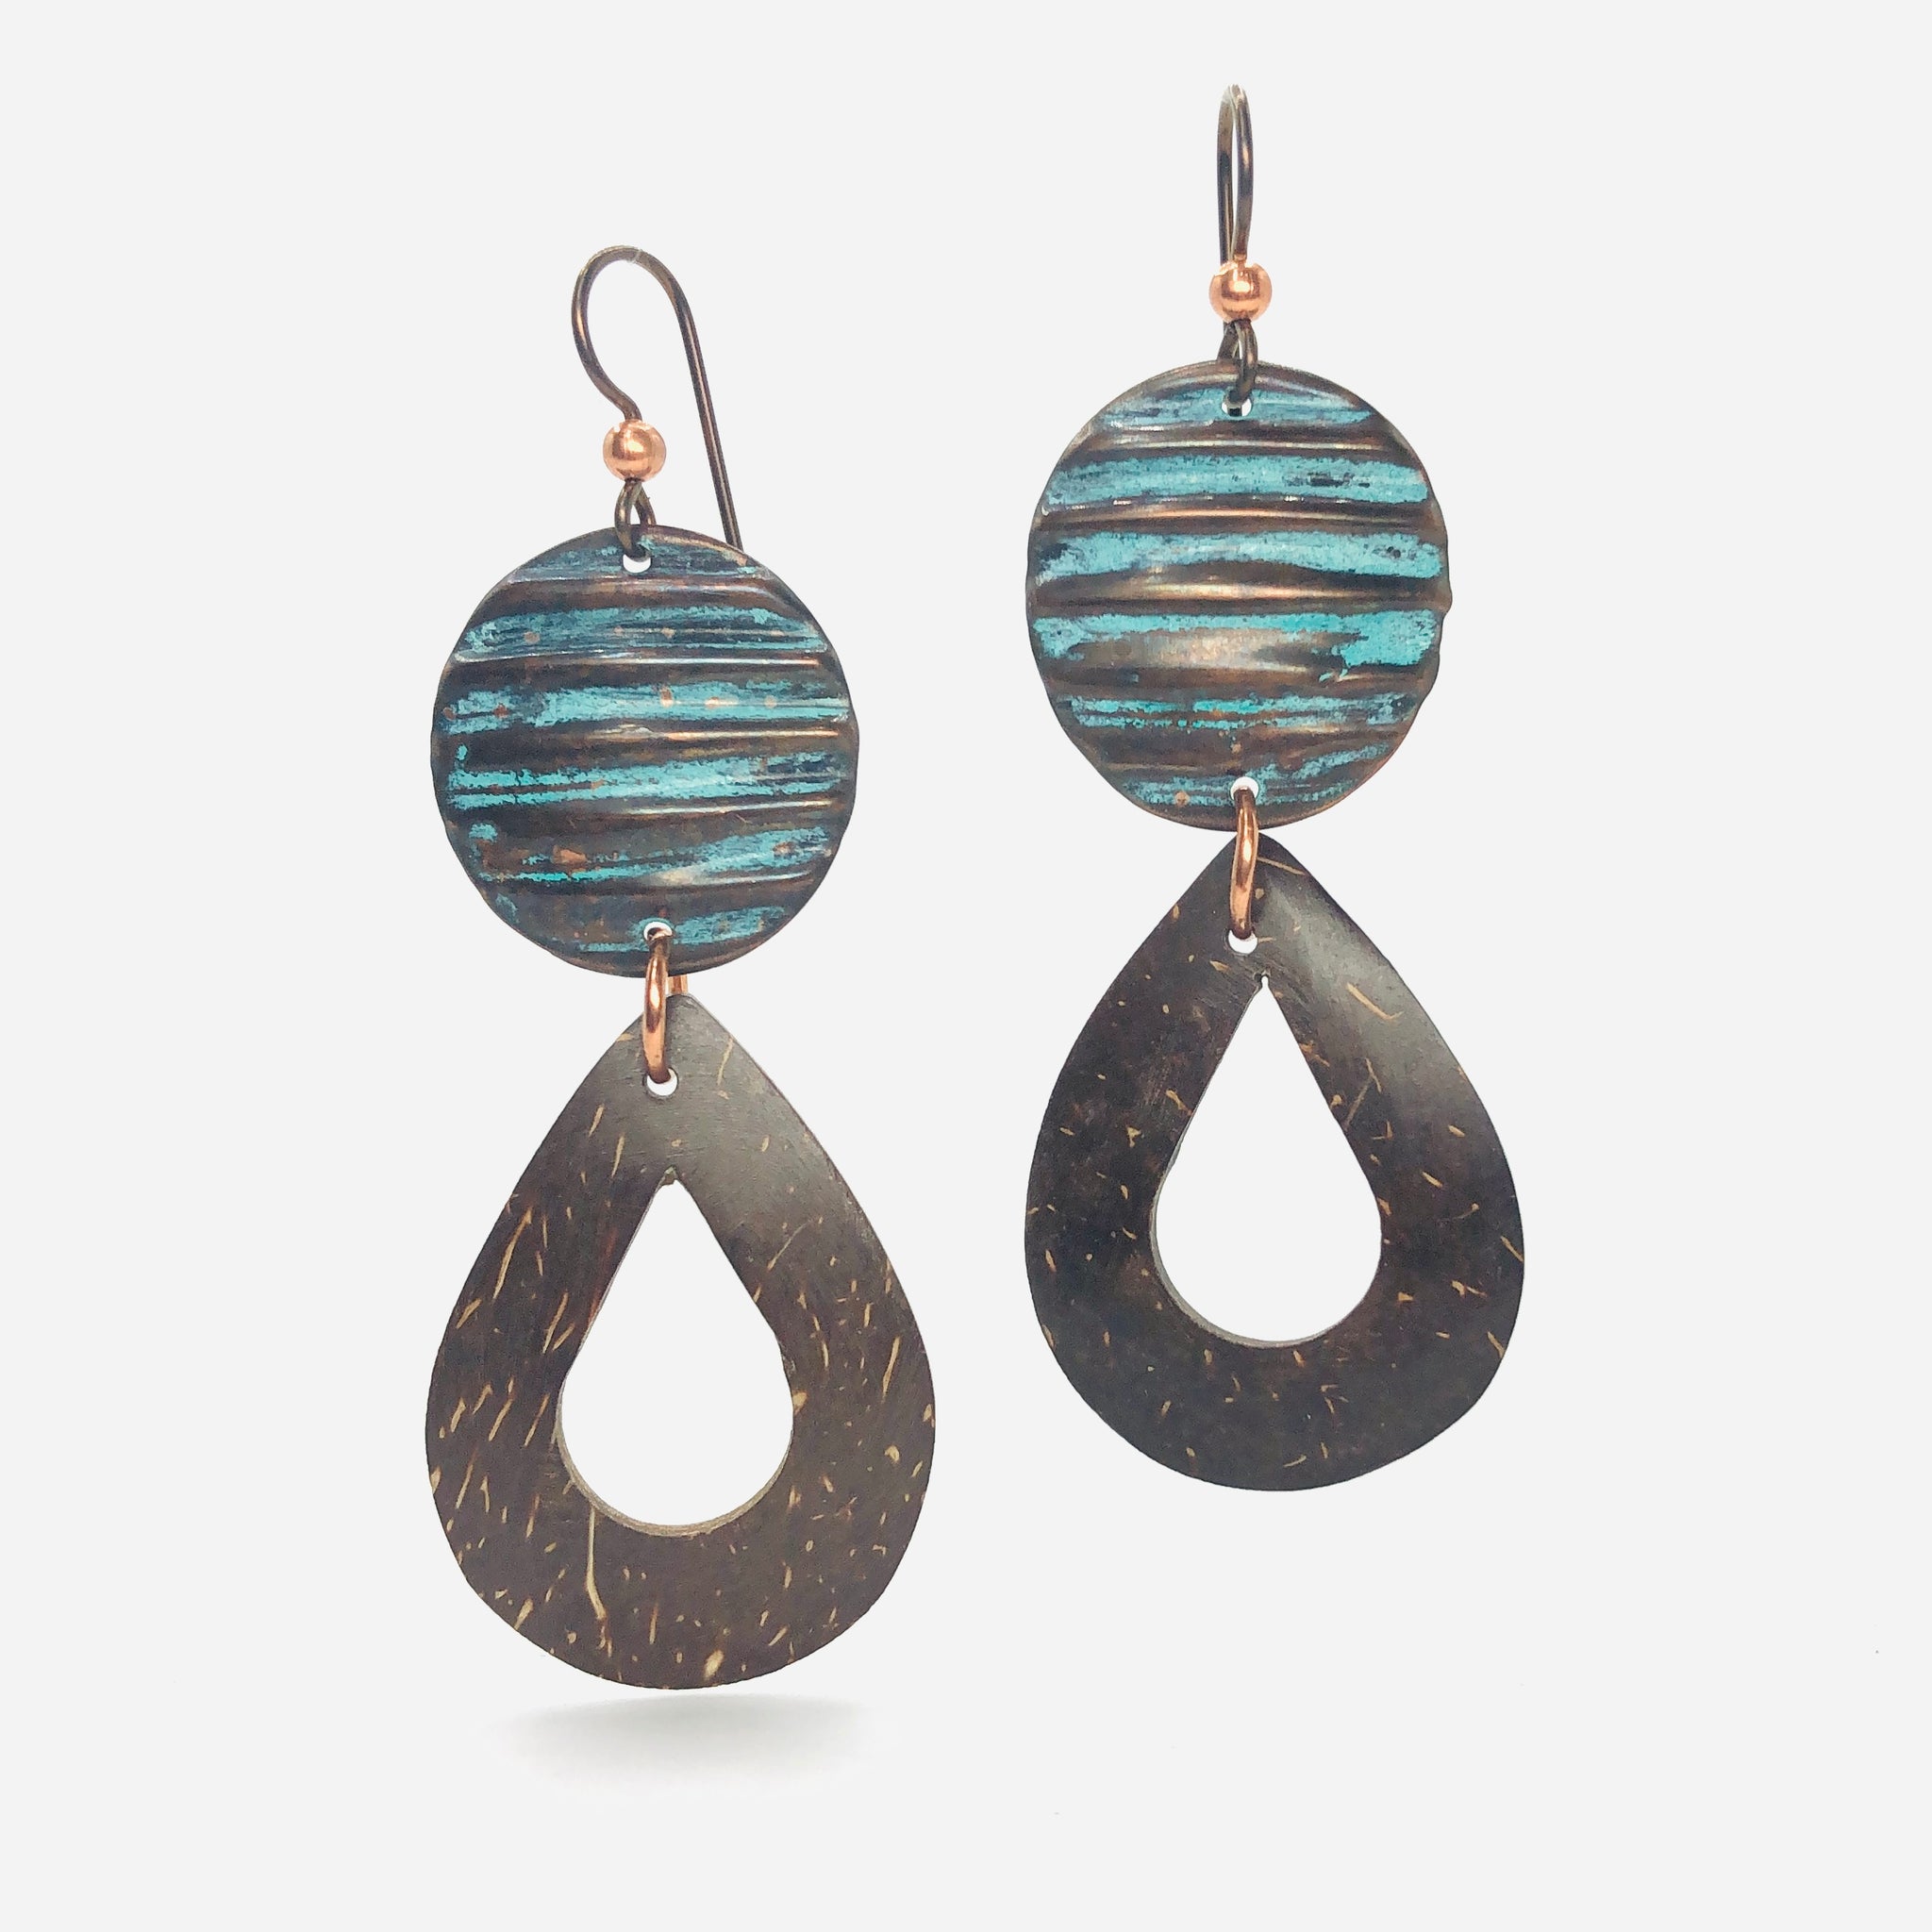 Brown Coconut Shell Earrings - Etsy | Casca artesanato, Brincos artesanais,  Como fazer artesanato